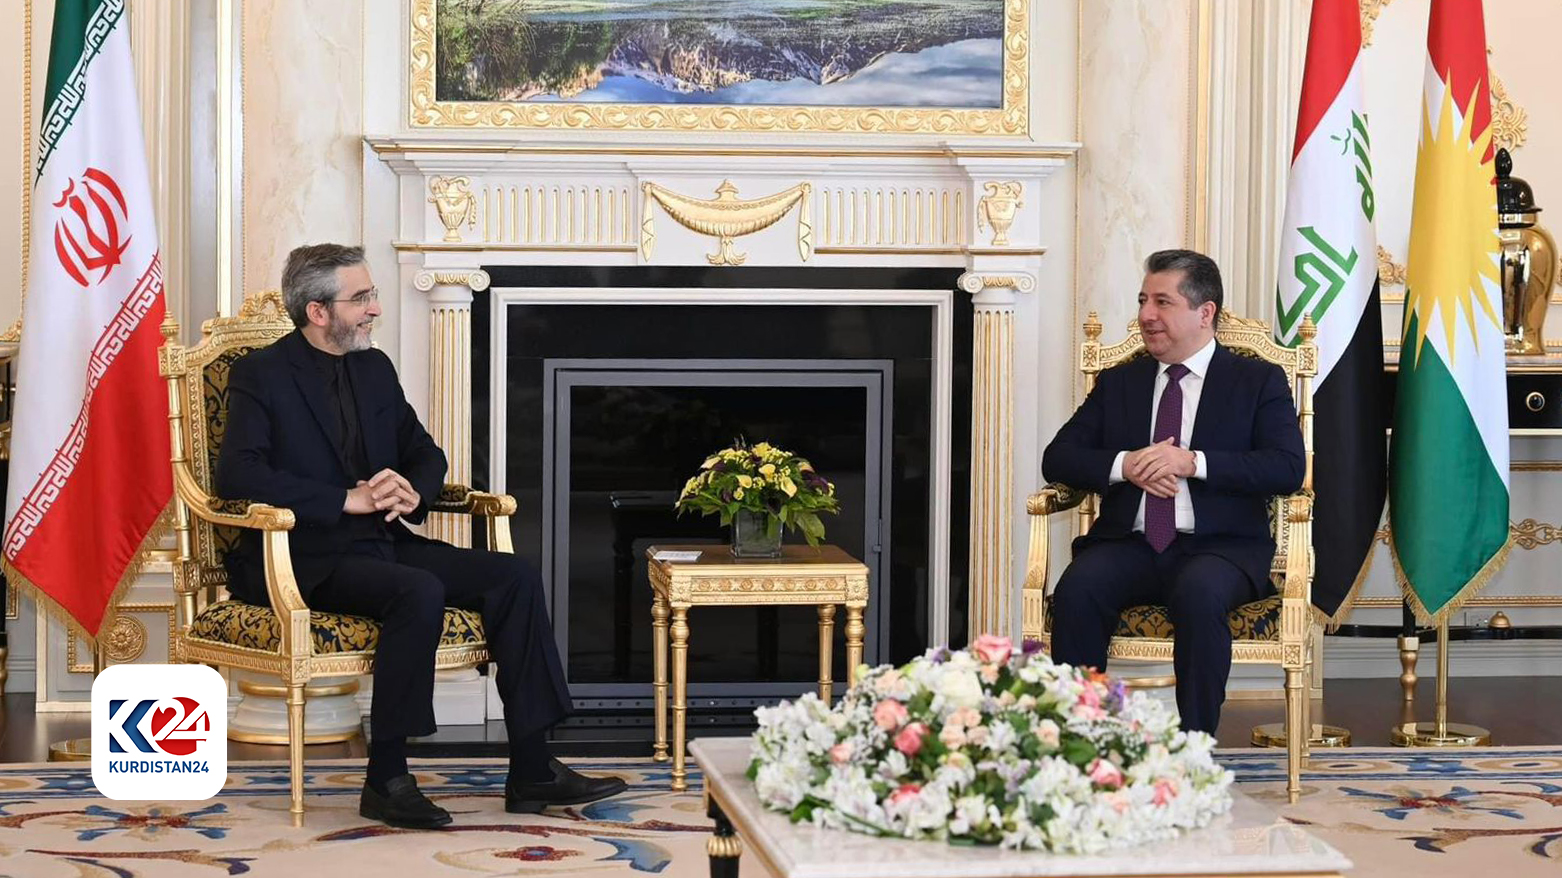 PM Barzani Iranian FM meet to discuss bilateral relations